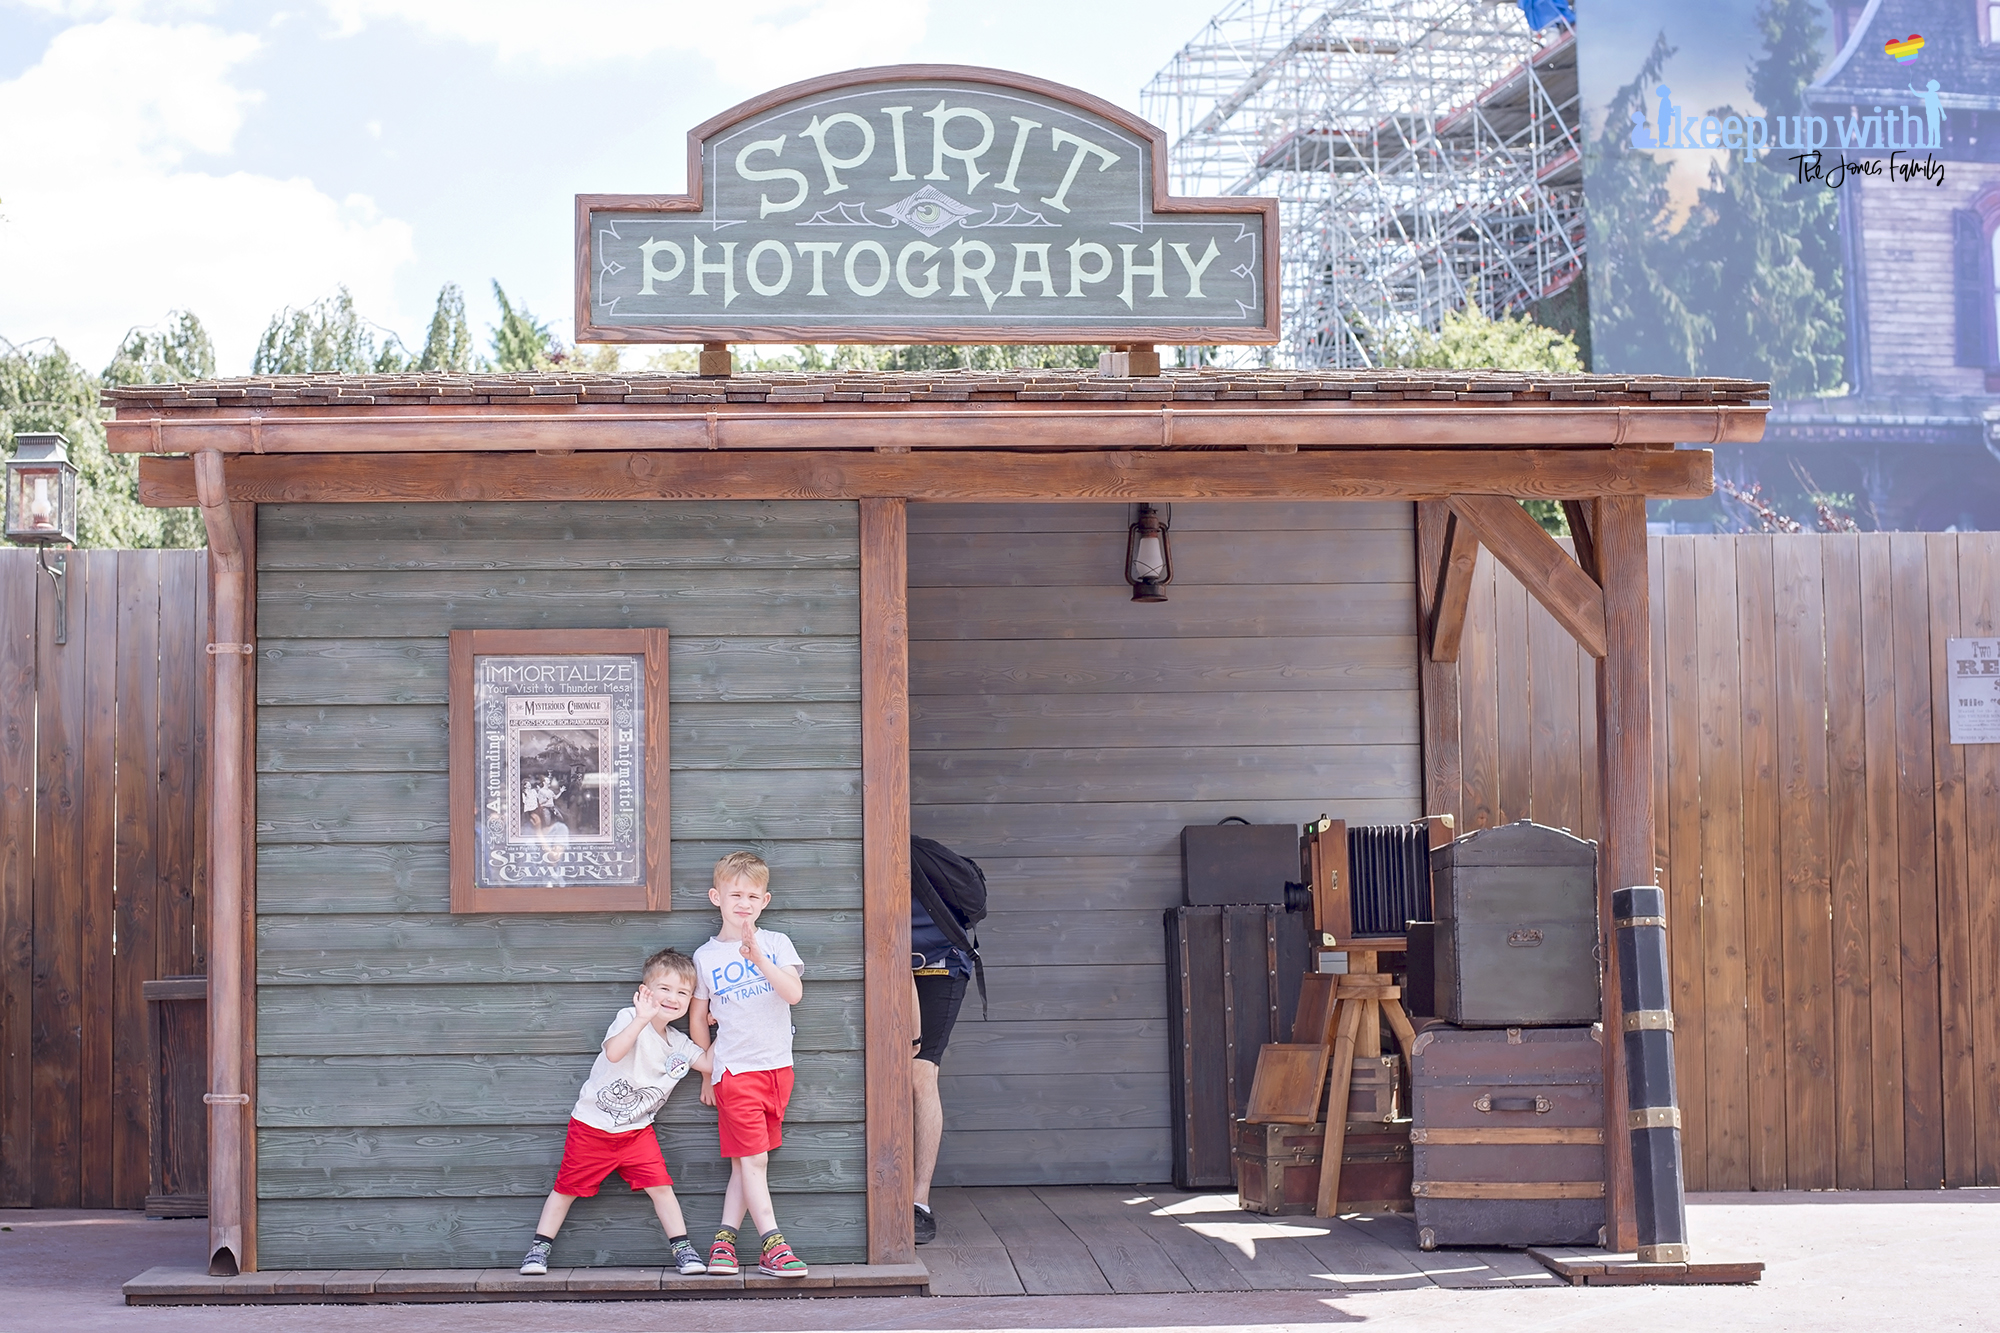 Spirit Photography at Disneyland Paris